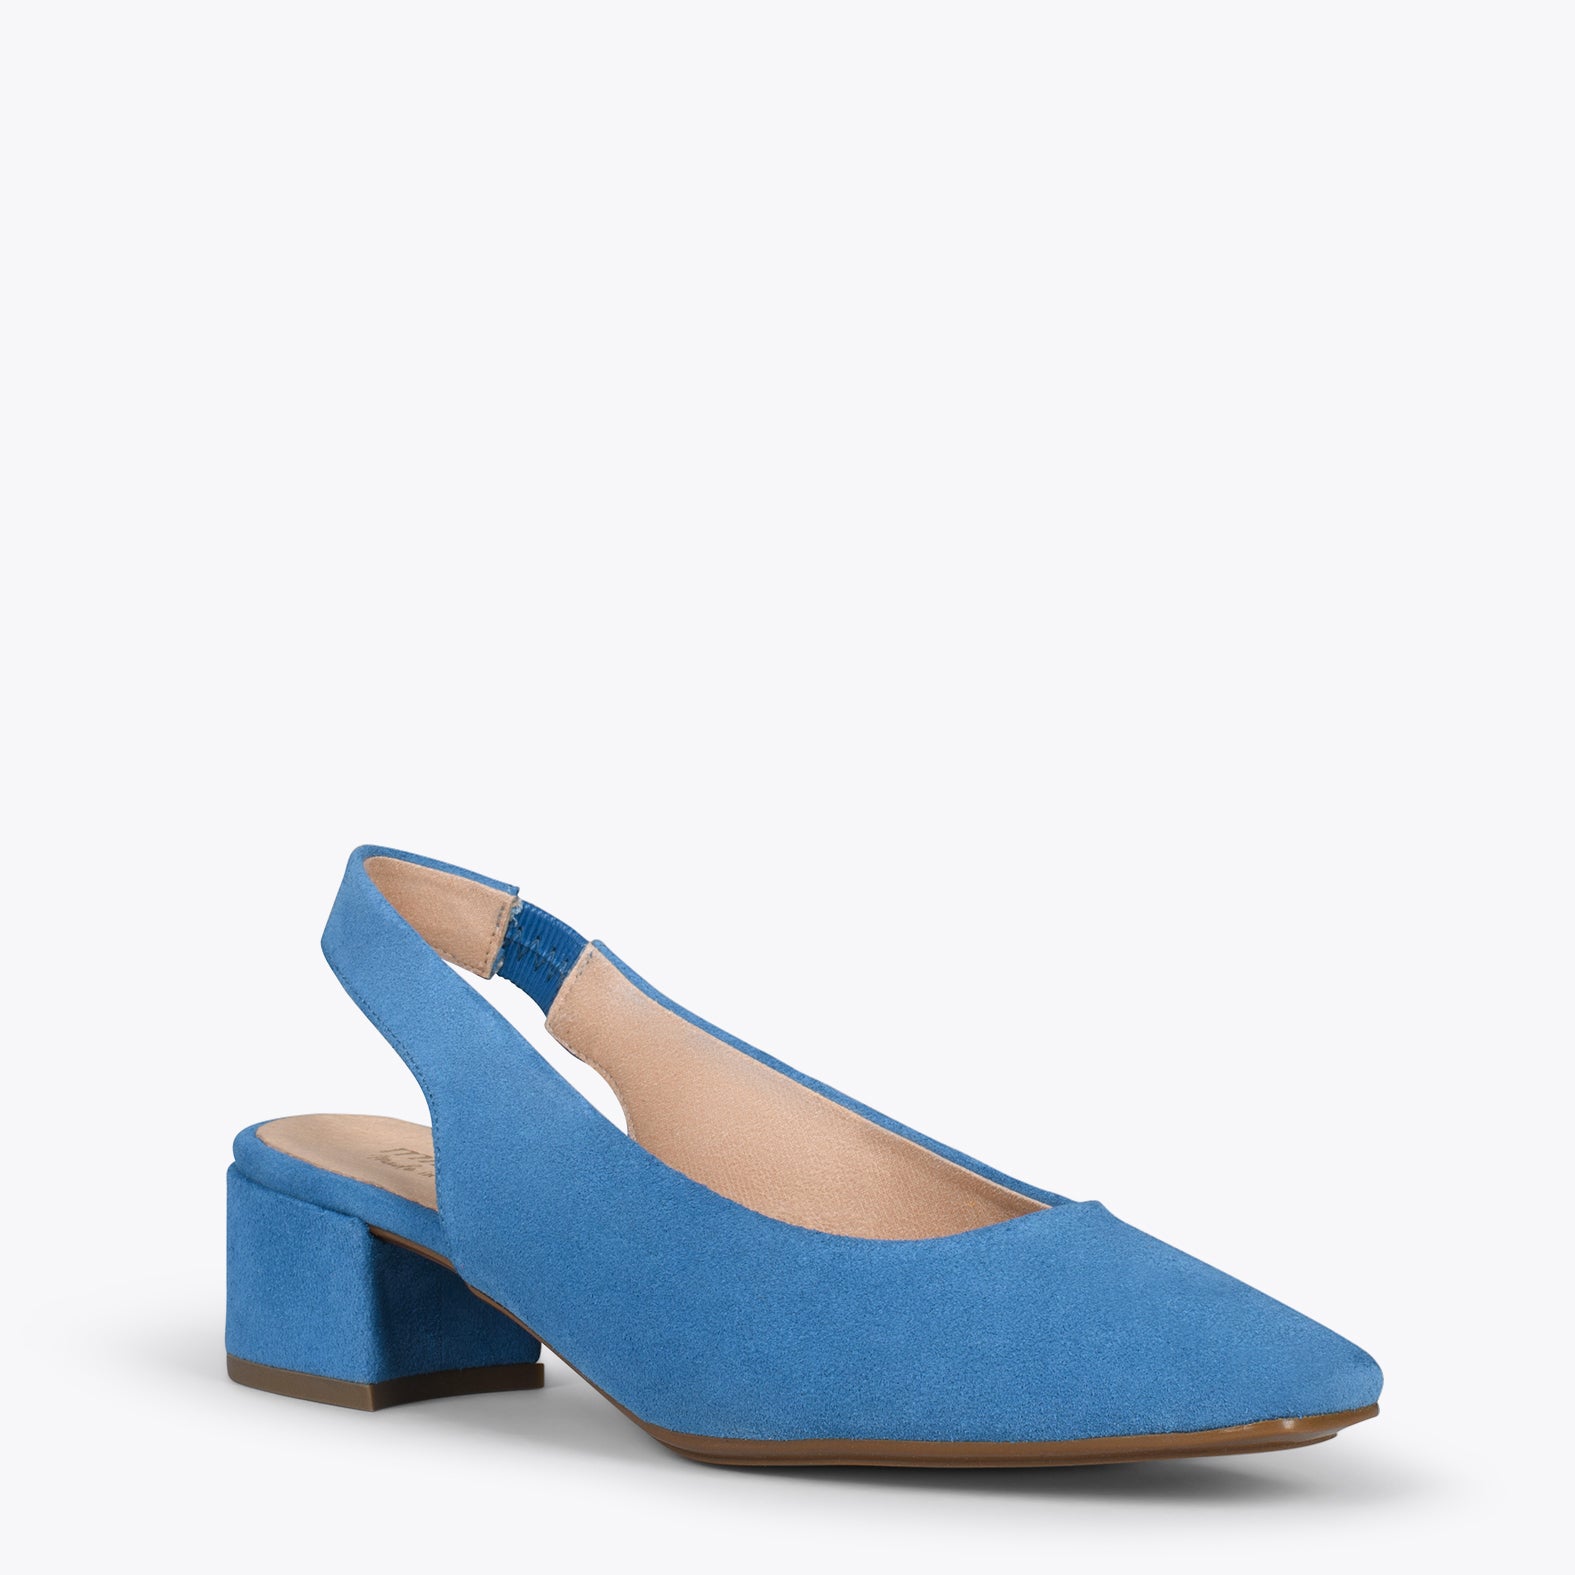 LADY – BLUE sling-back mid heels